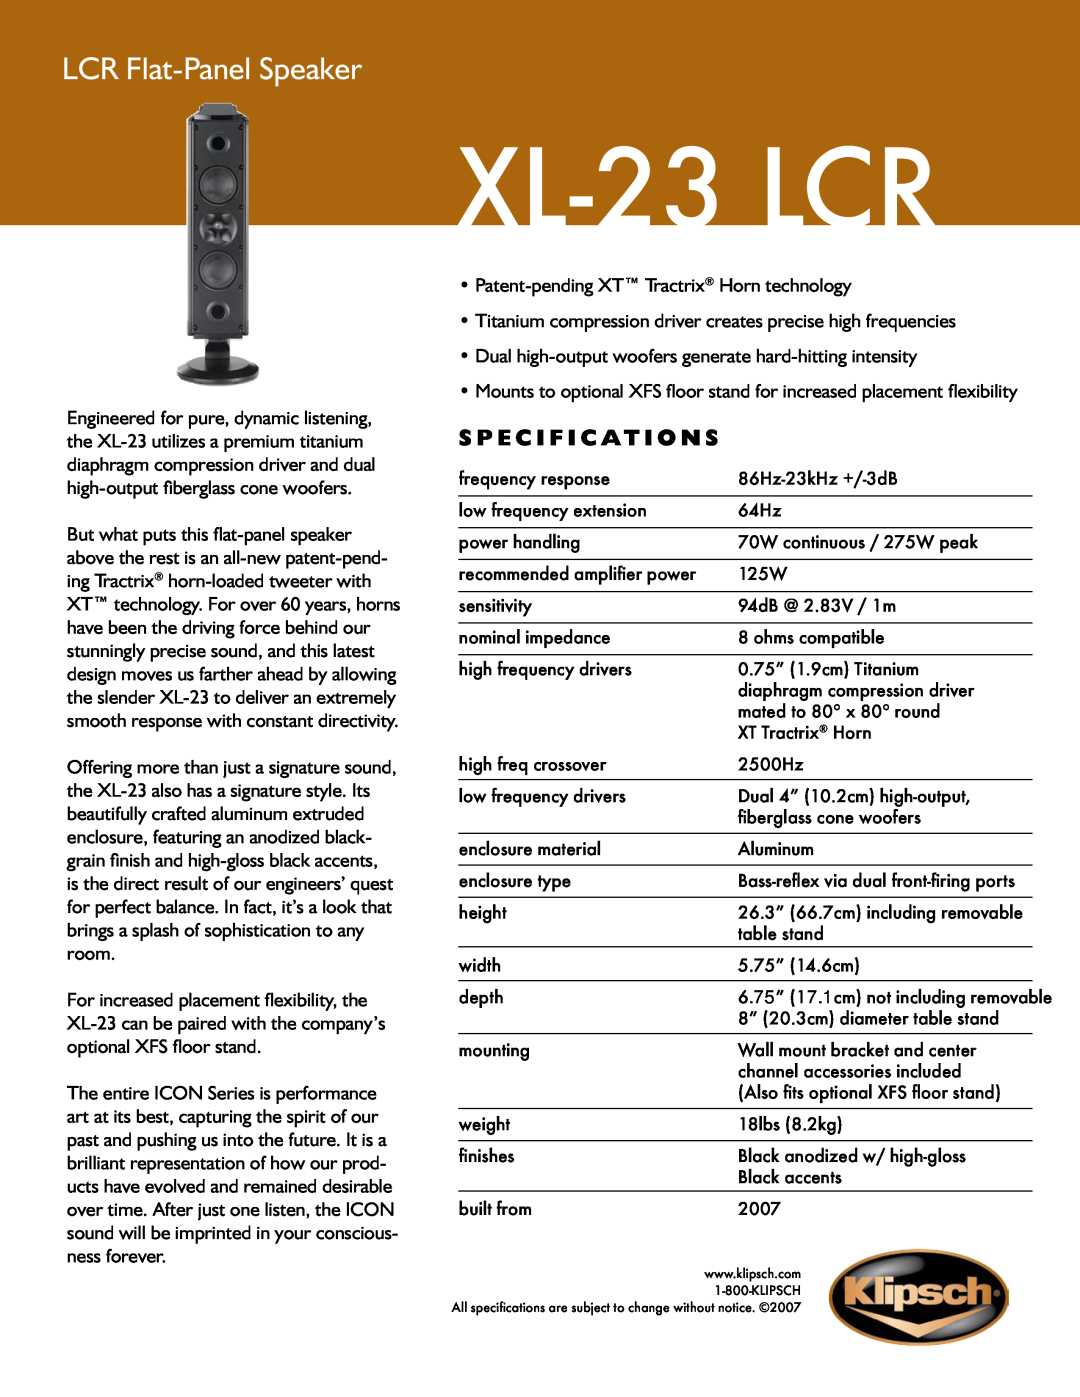 Klipsch specifications XL-23LCR, LCR Flat-PanelSpeaker, S p e c i f i c a t i o n s 